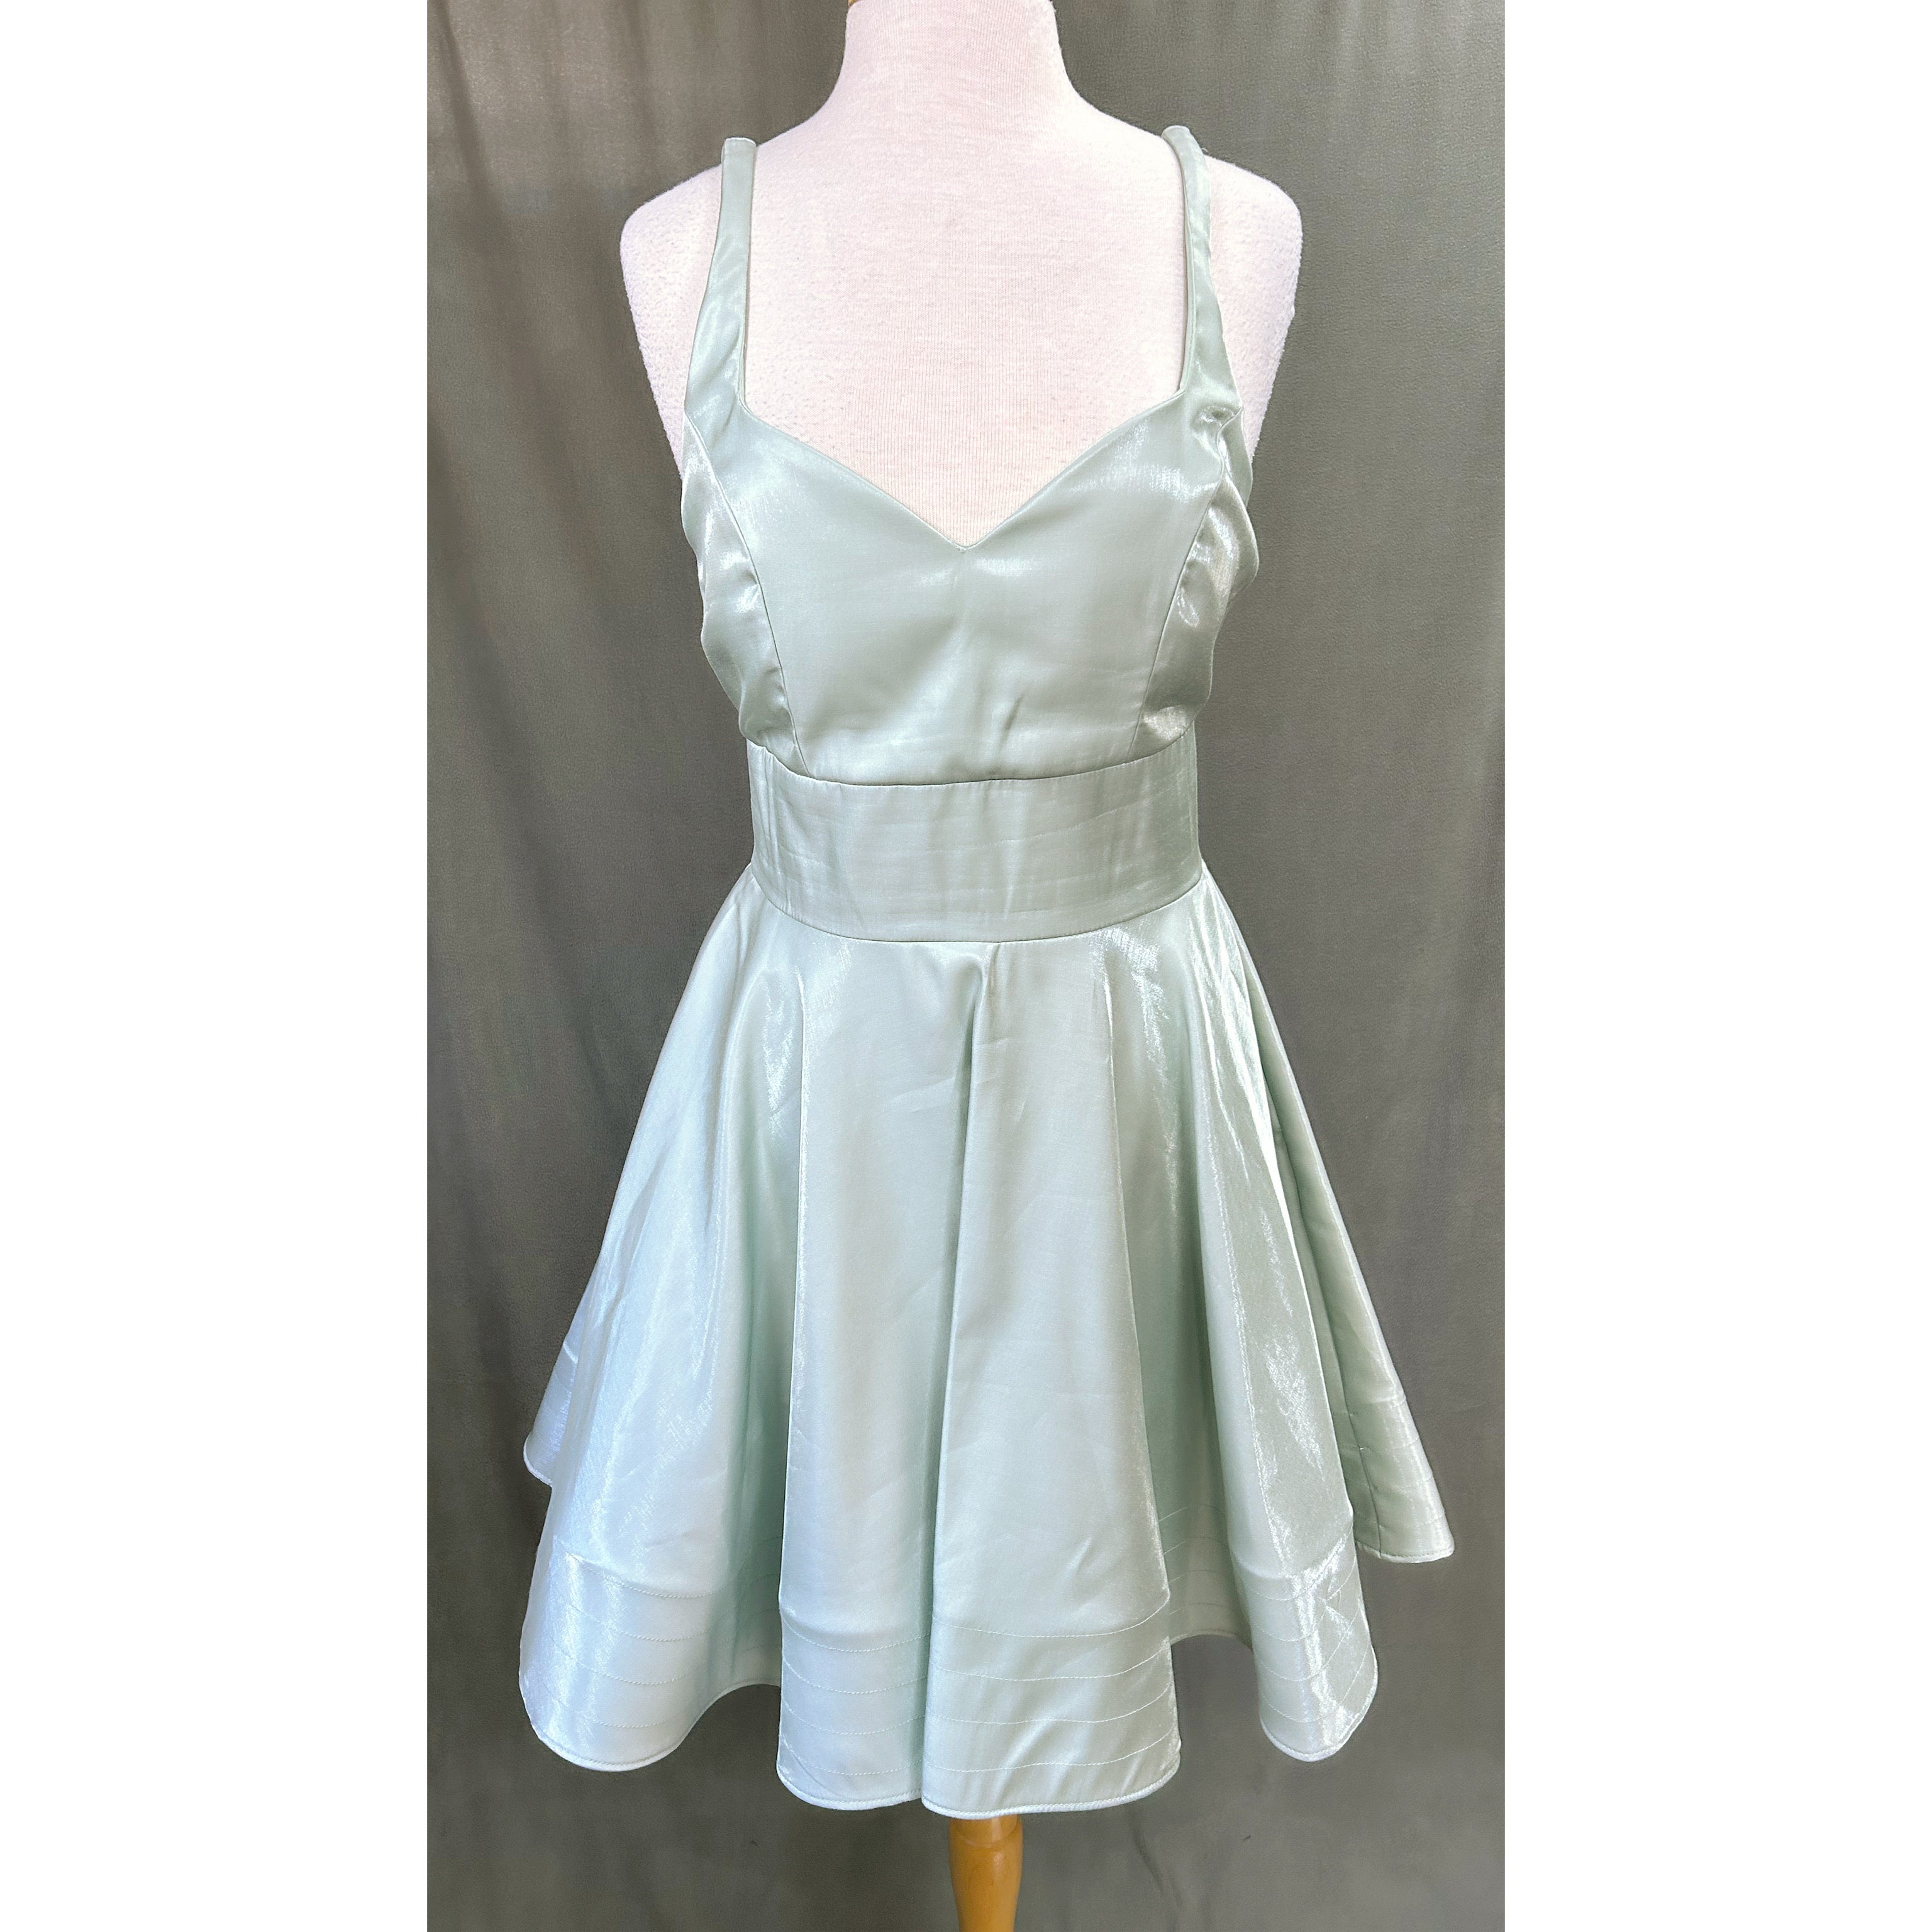 Sequin Hearts mint dress, size 15